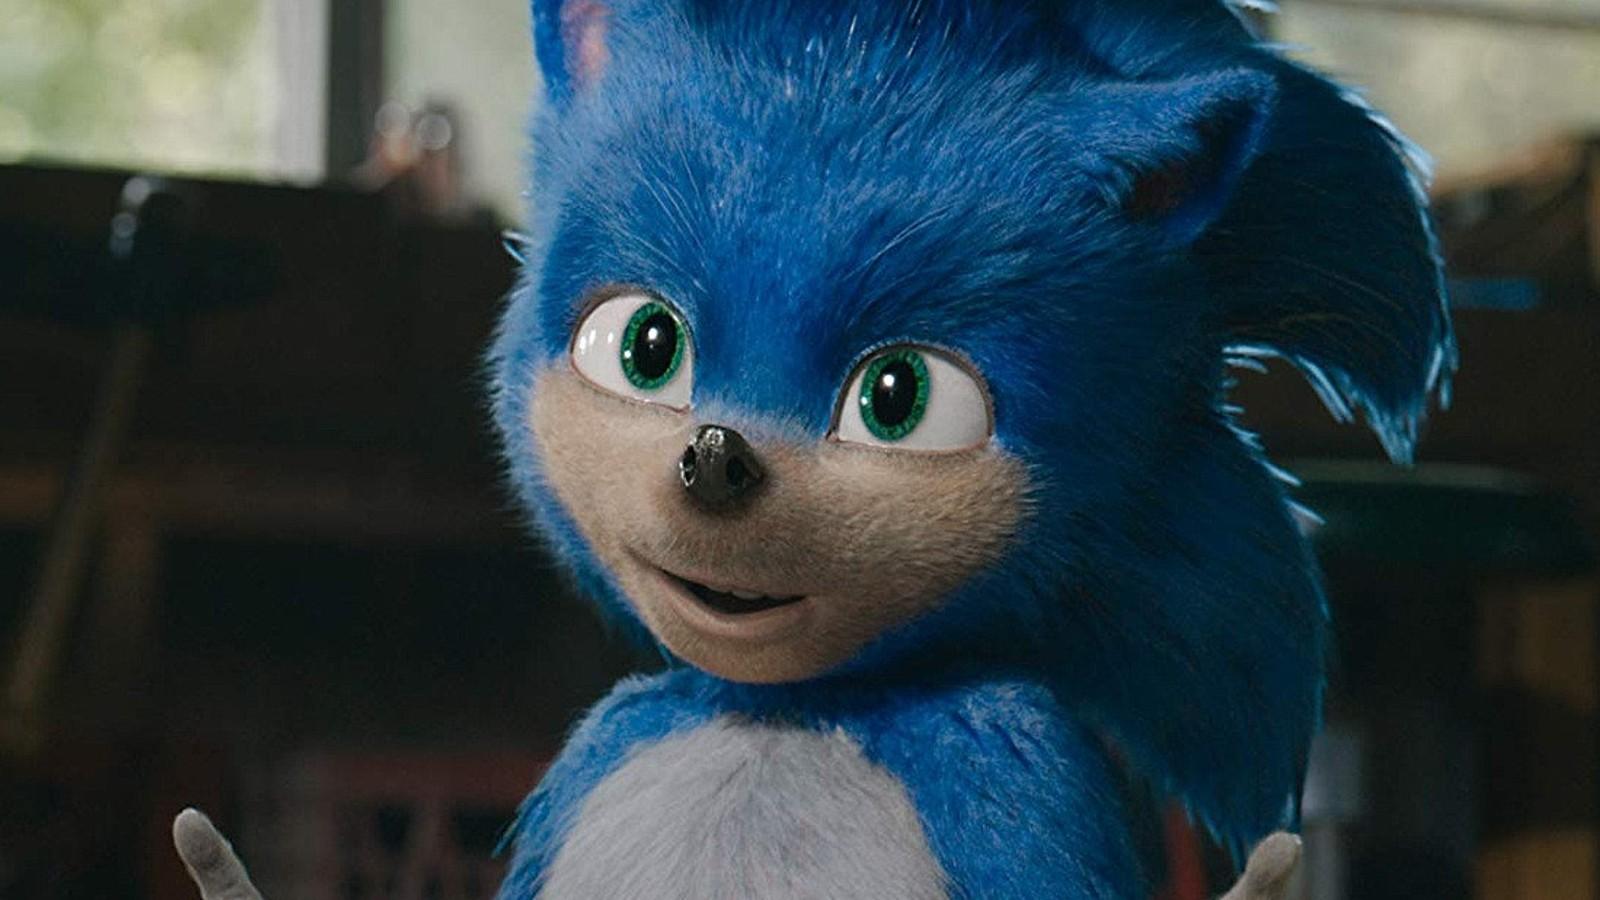 Sonic the Hedgehog 2020